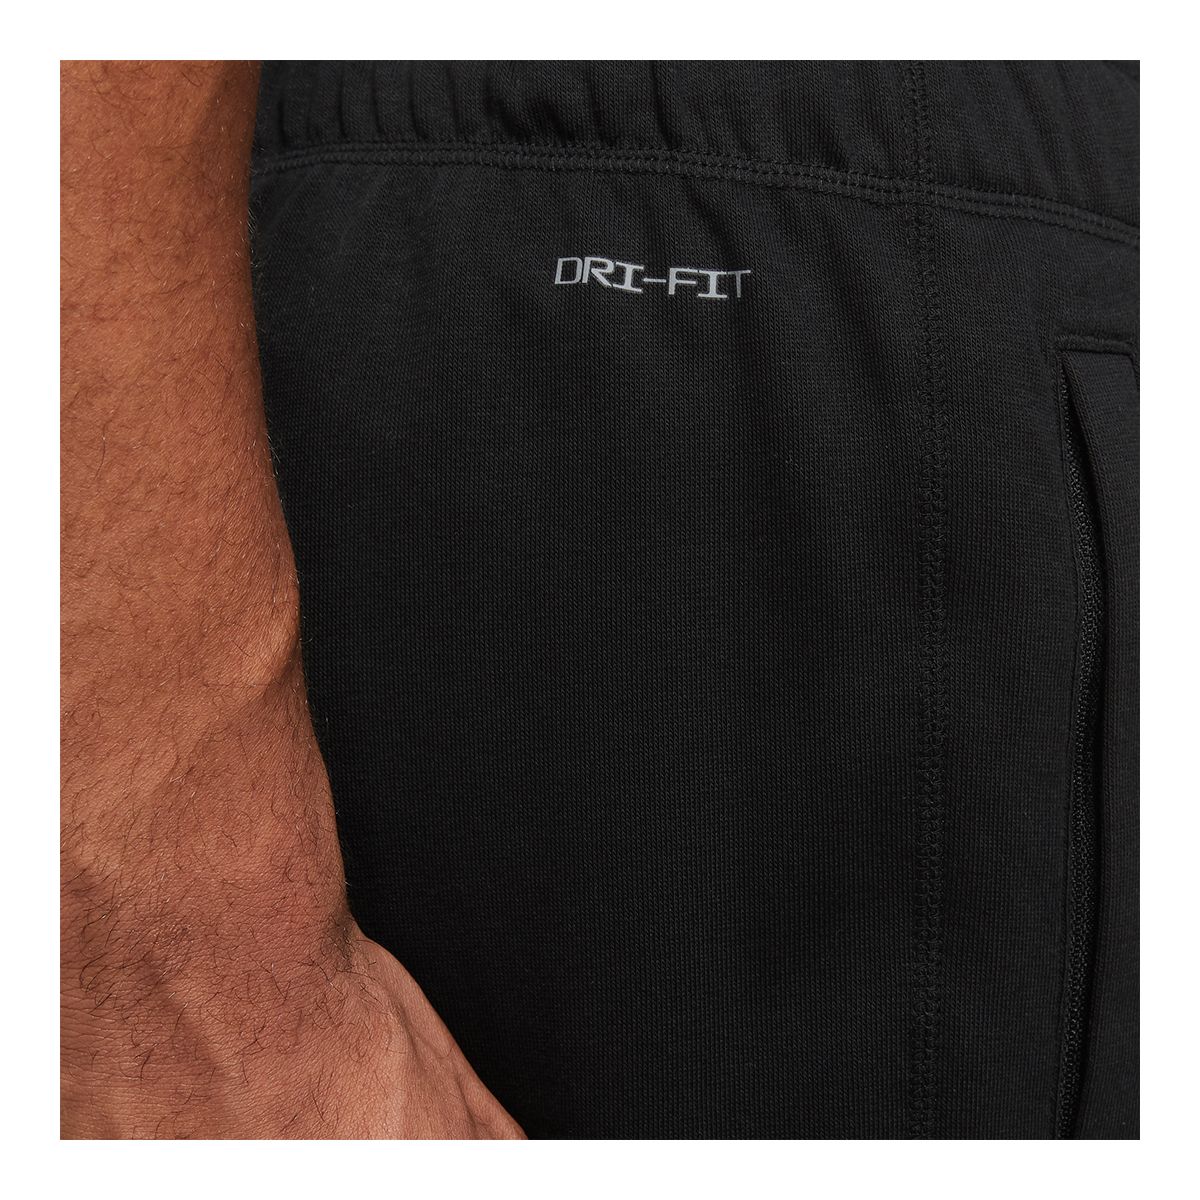 Jordan Men's Dri-FIT Sport Fleece Pants